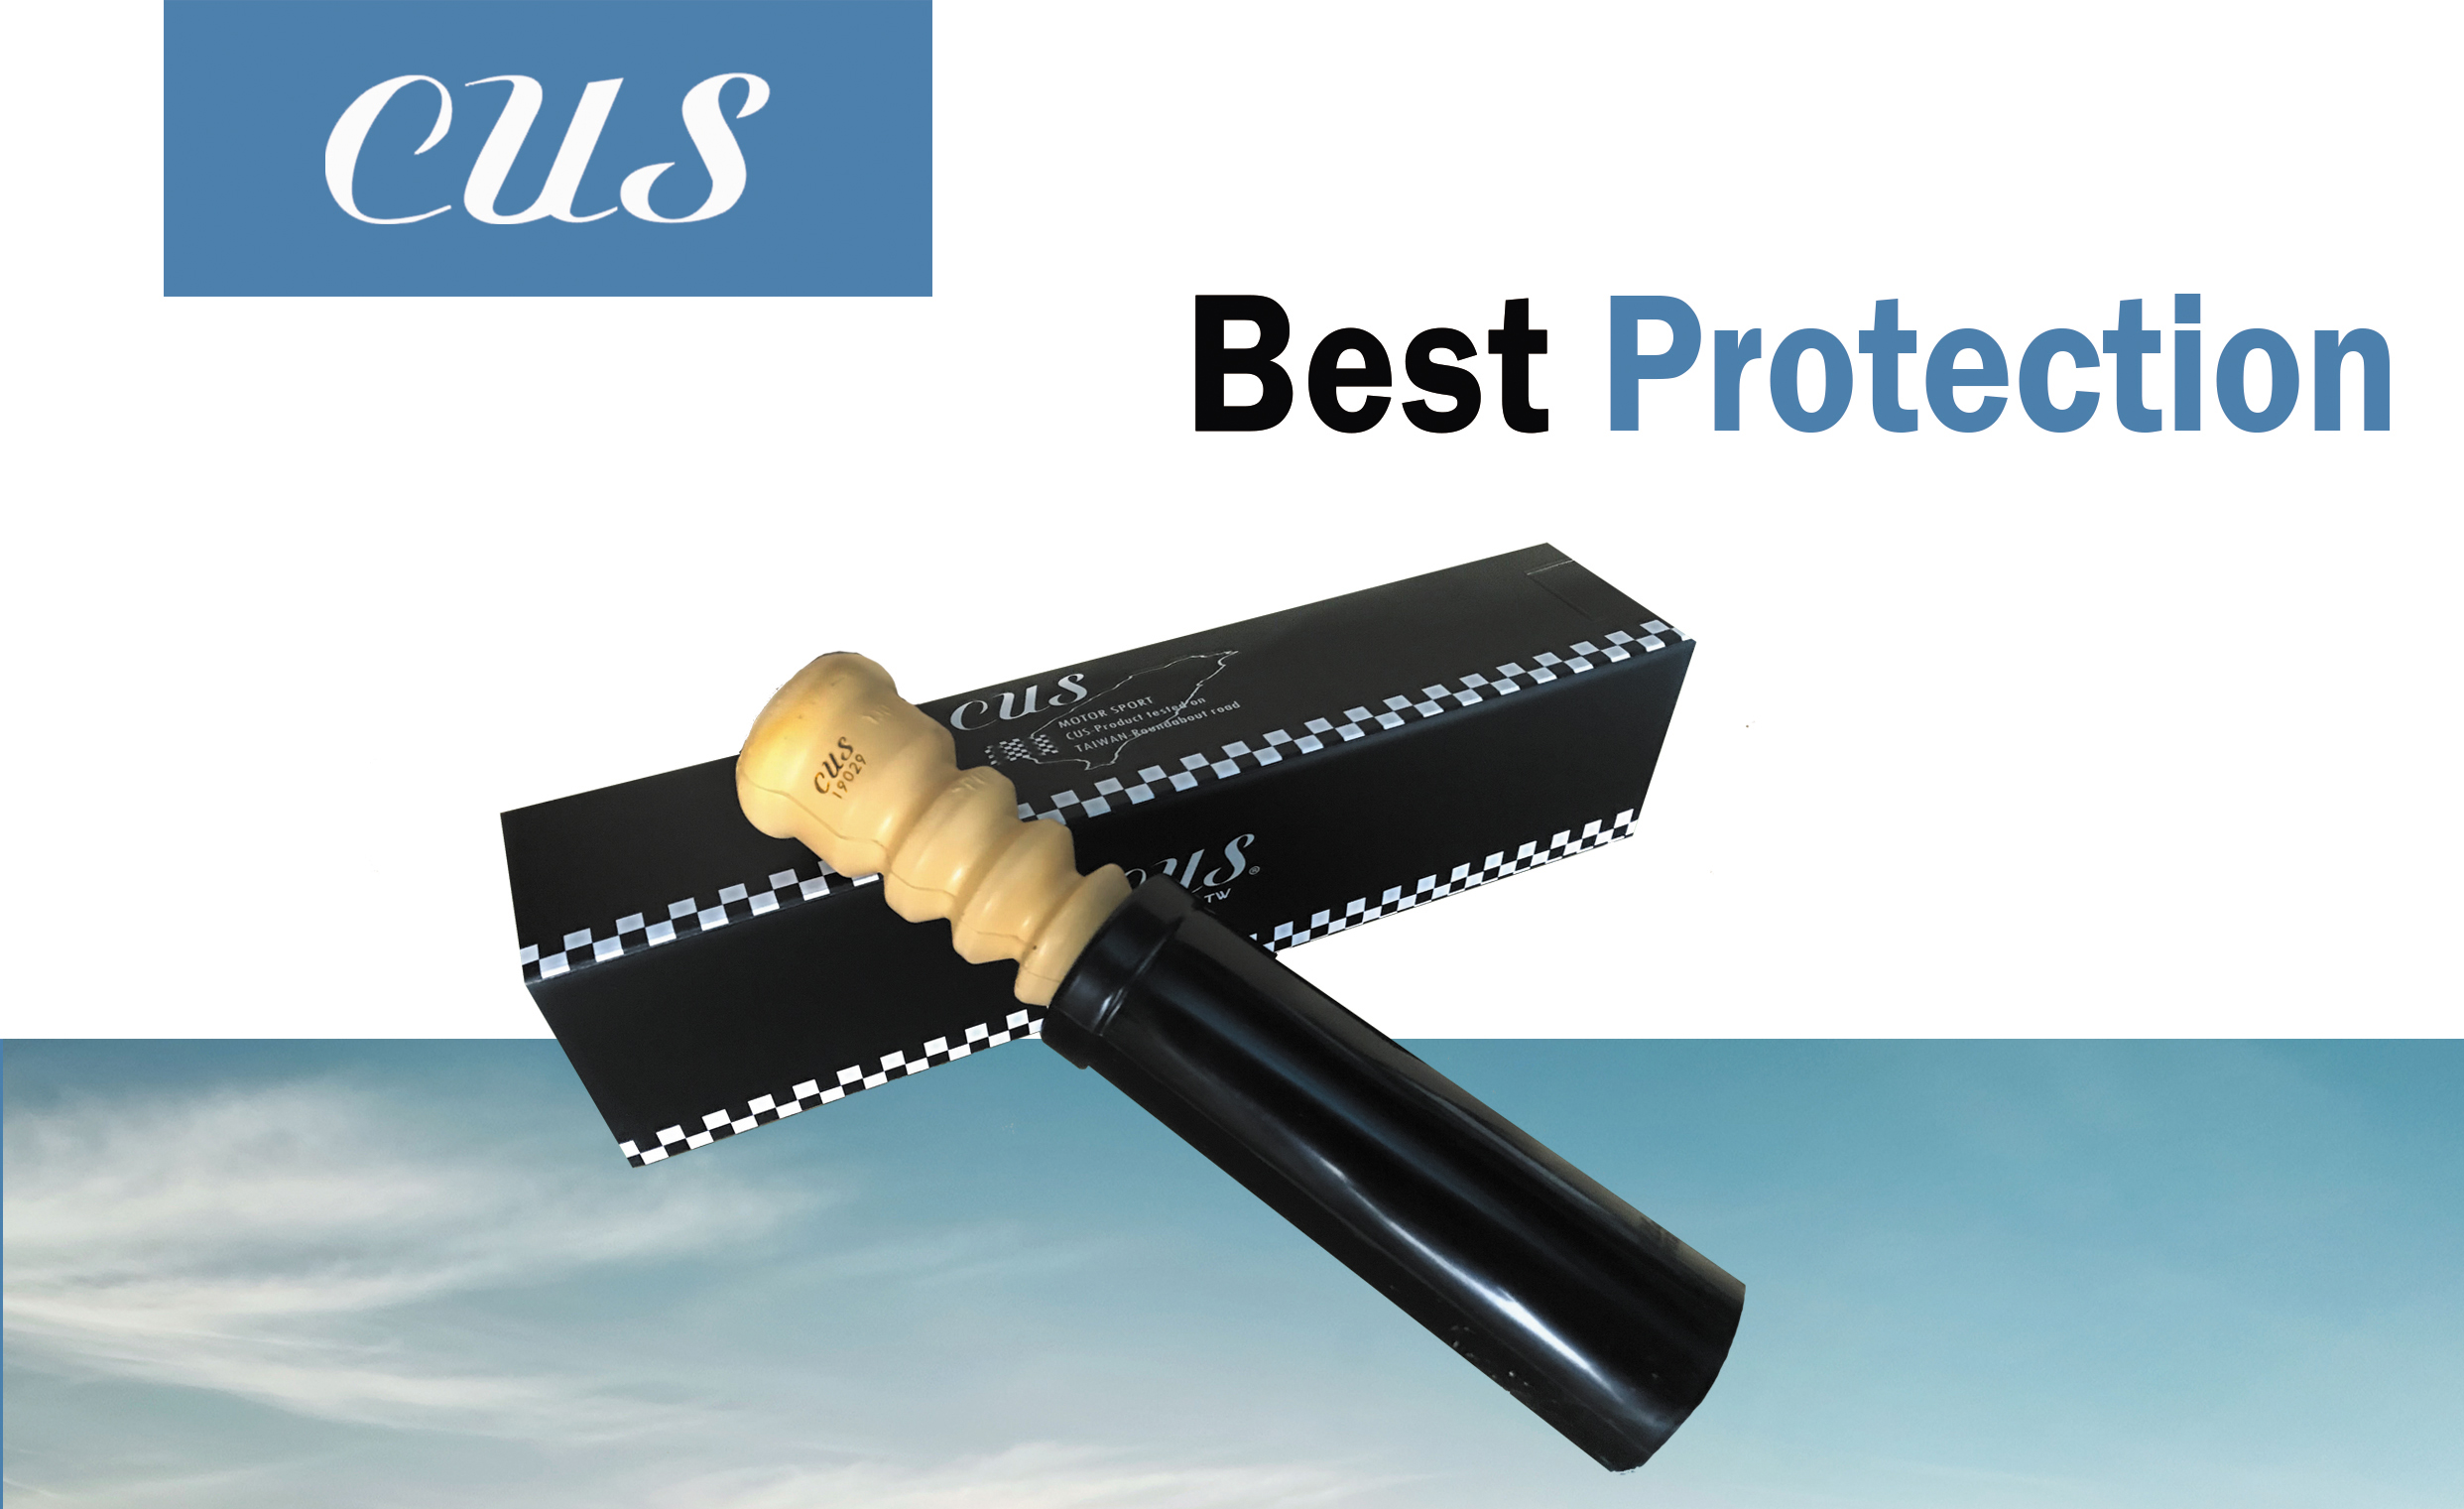 CUS避震器防塵套緩衝塊組Protection Kit